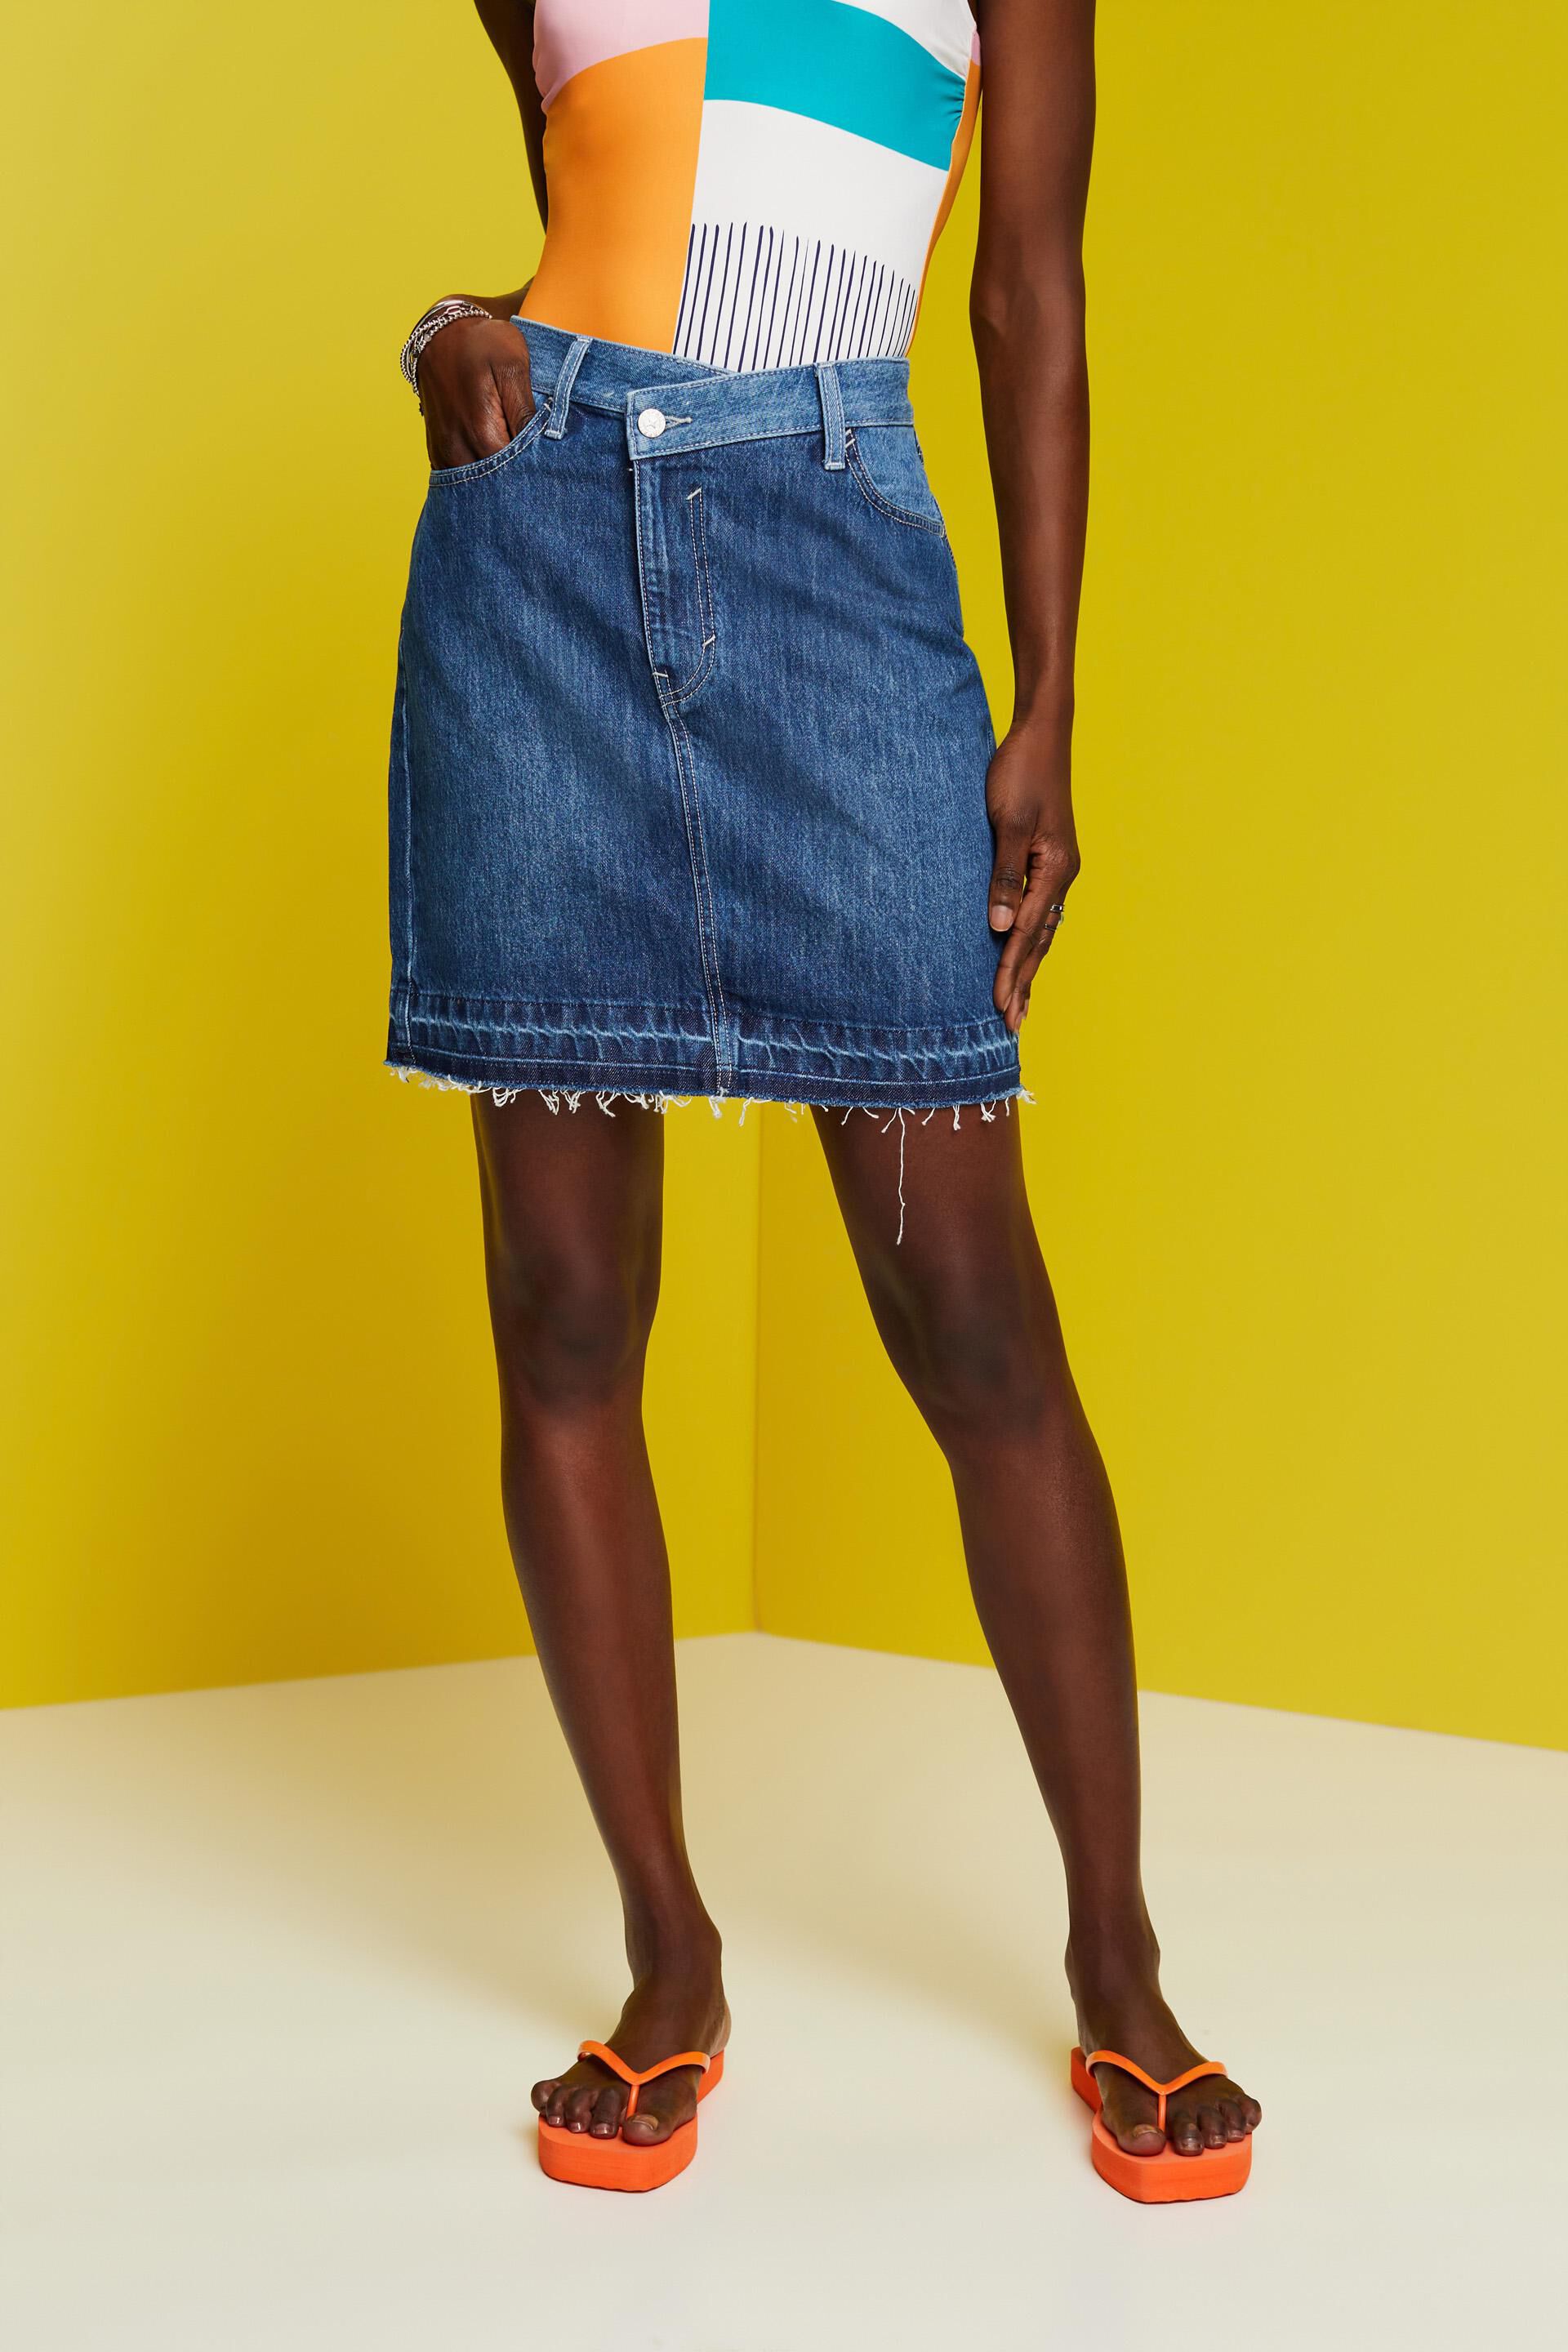 Esprit Jeans an skirt with asymmetric mini hem